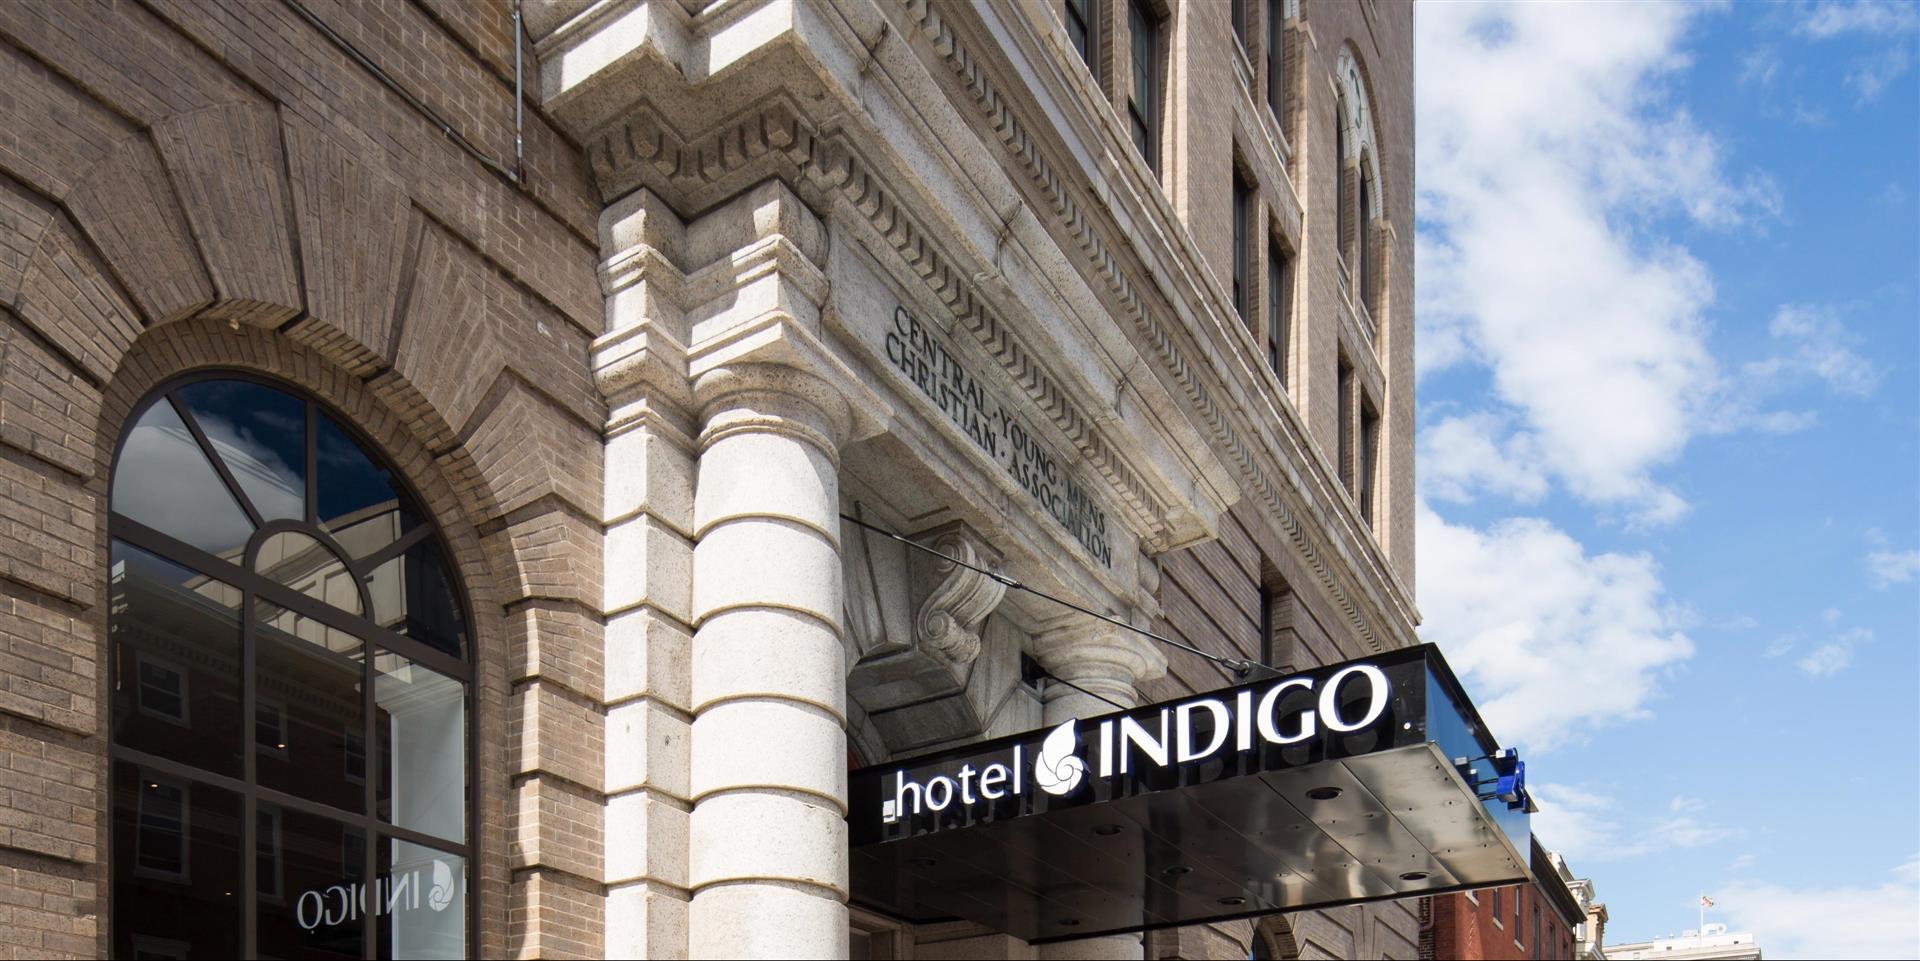 Hotel Indigo Baltimore Downtown in Baltimore, MD